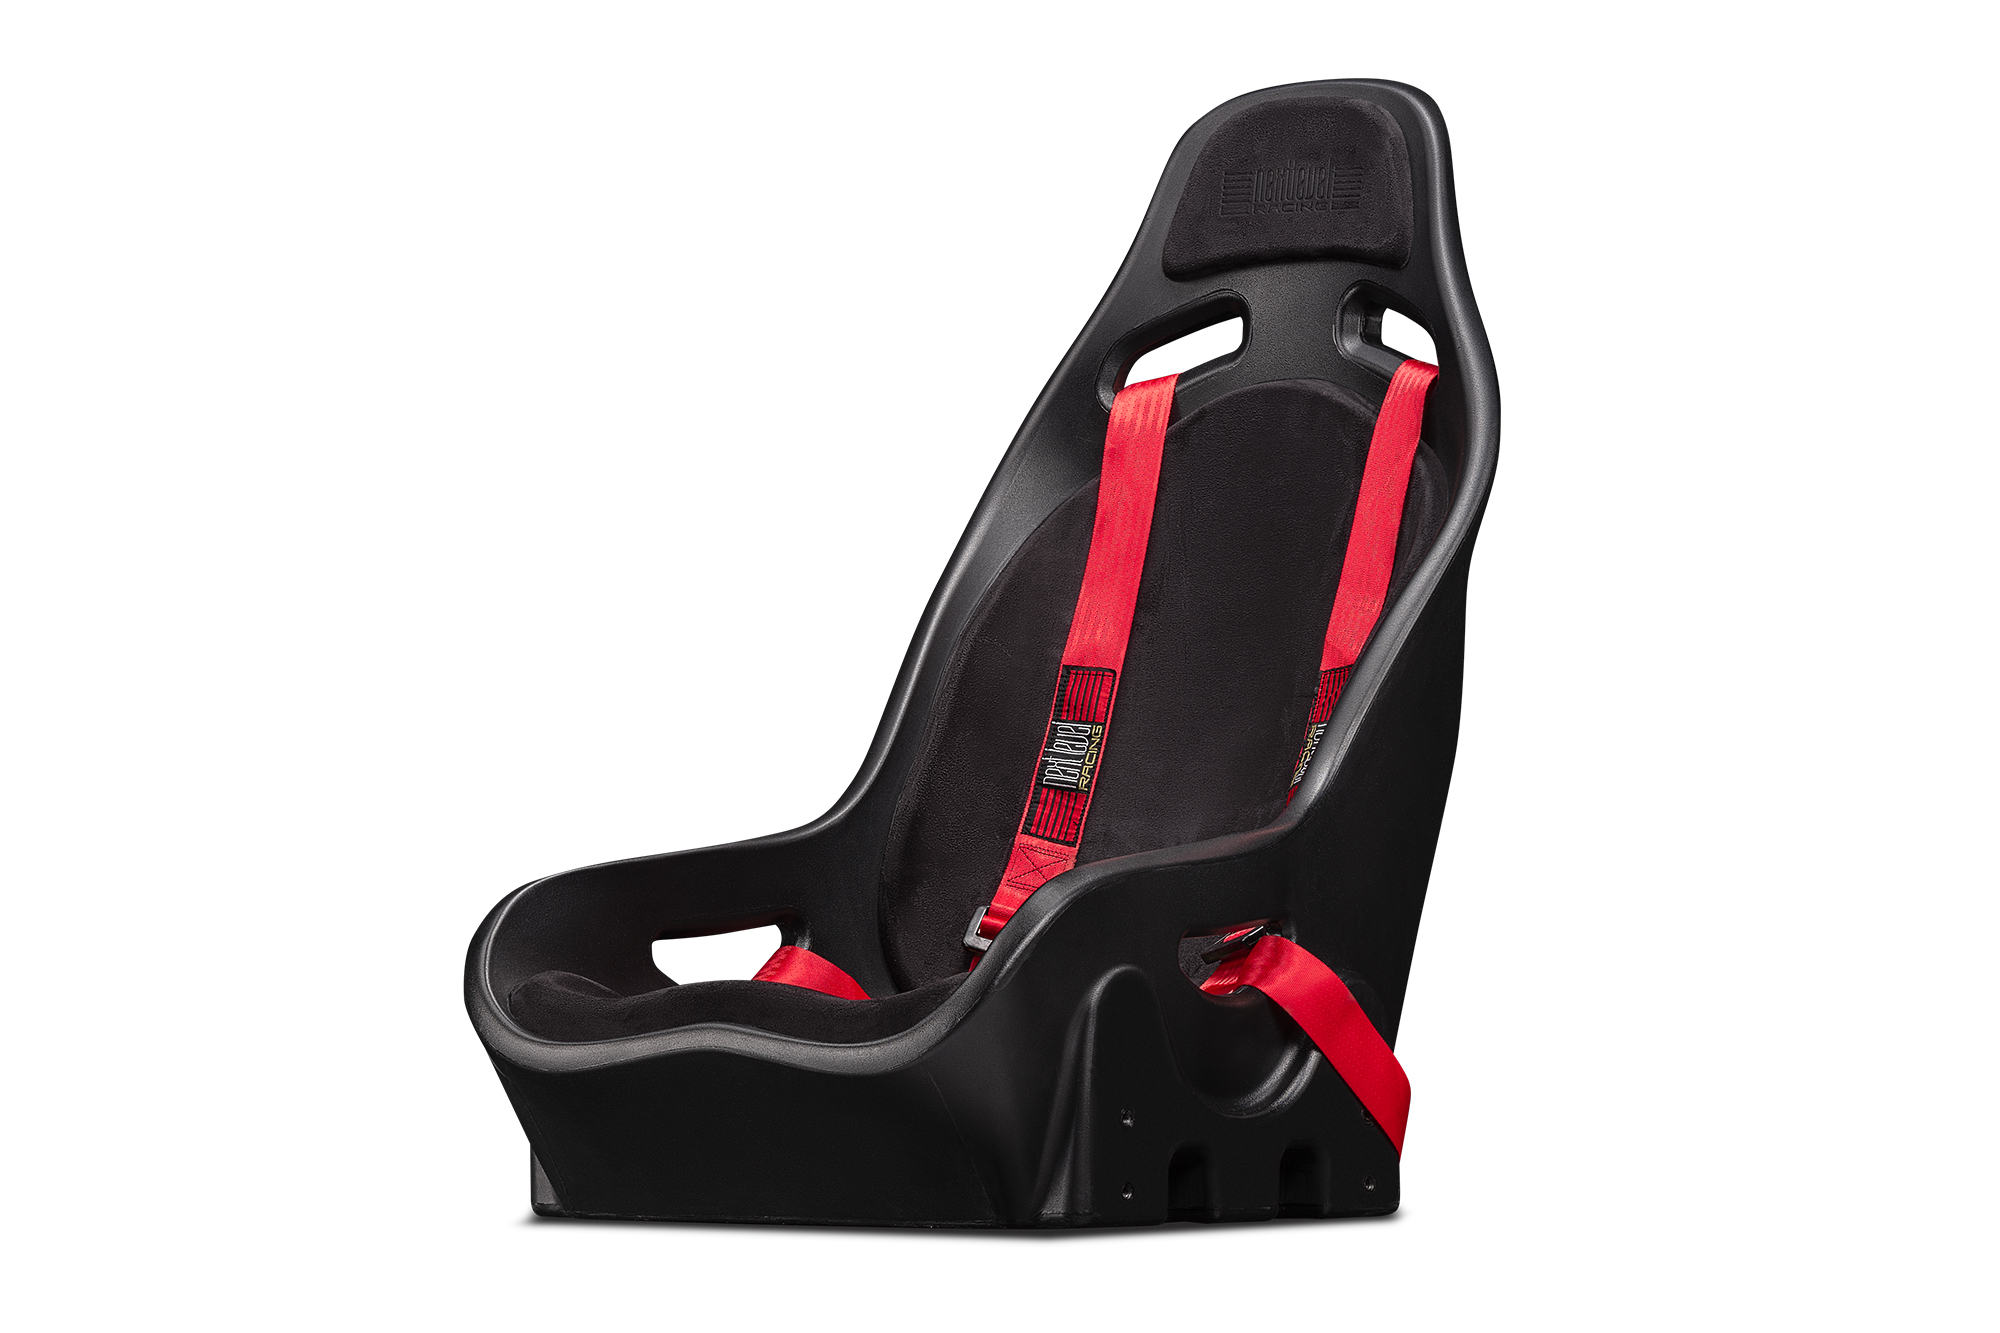 Next Level Racing - Elite ES1 Racing Simulator Seat